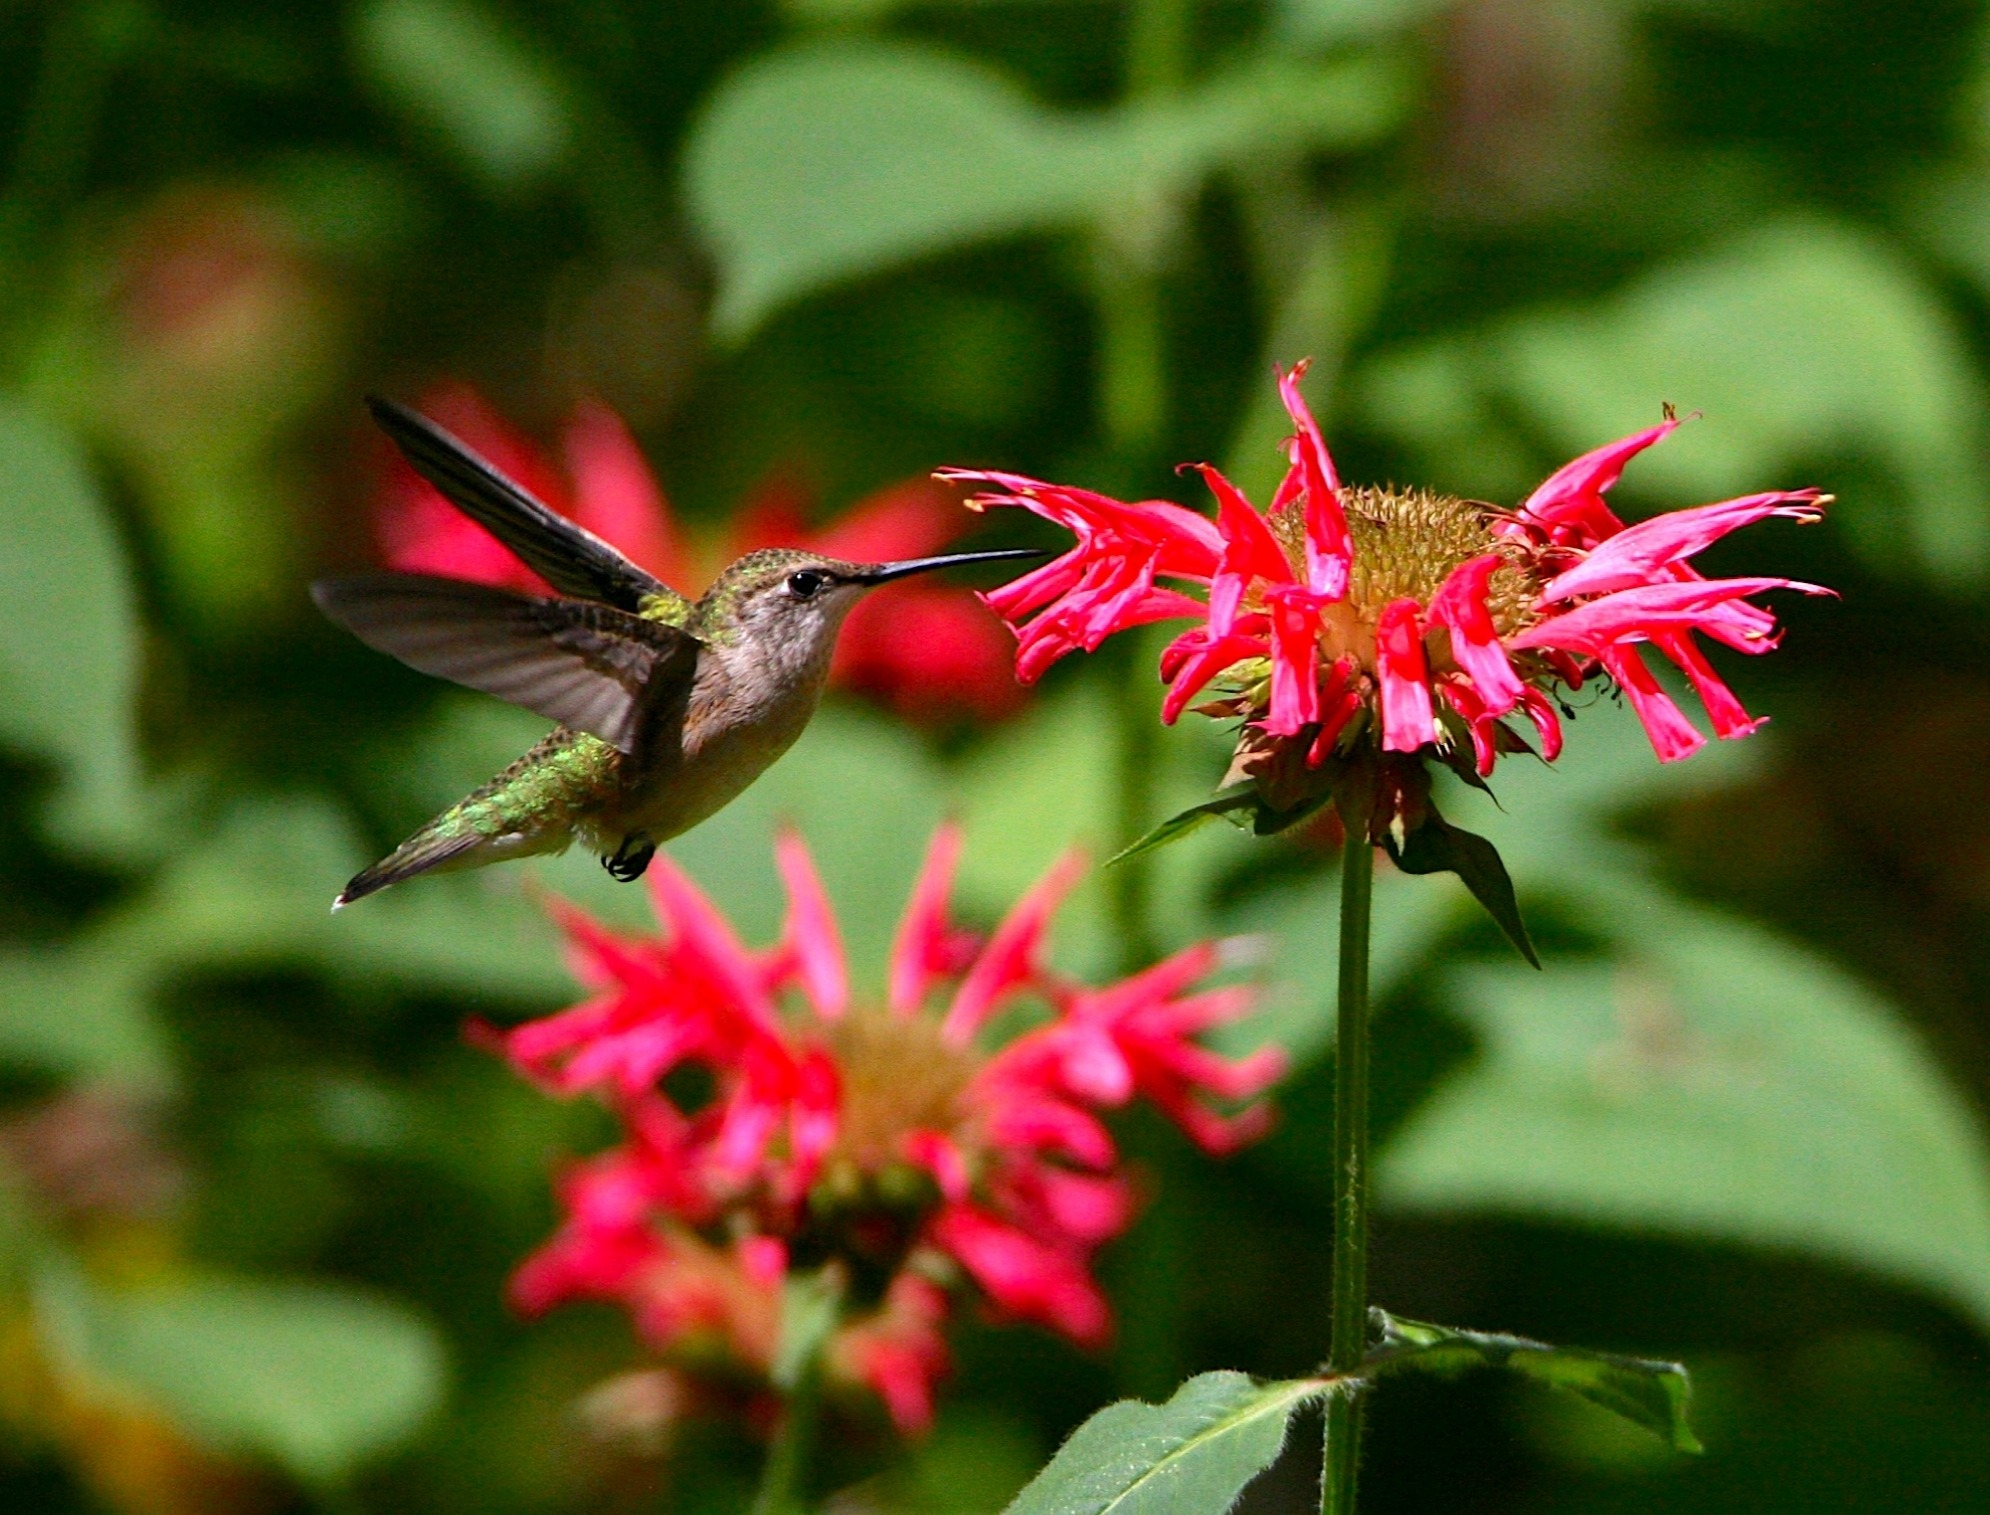 Ruby-throated Hummingbird on flower